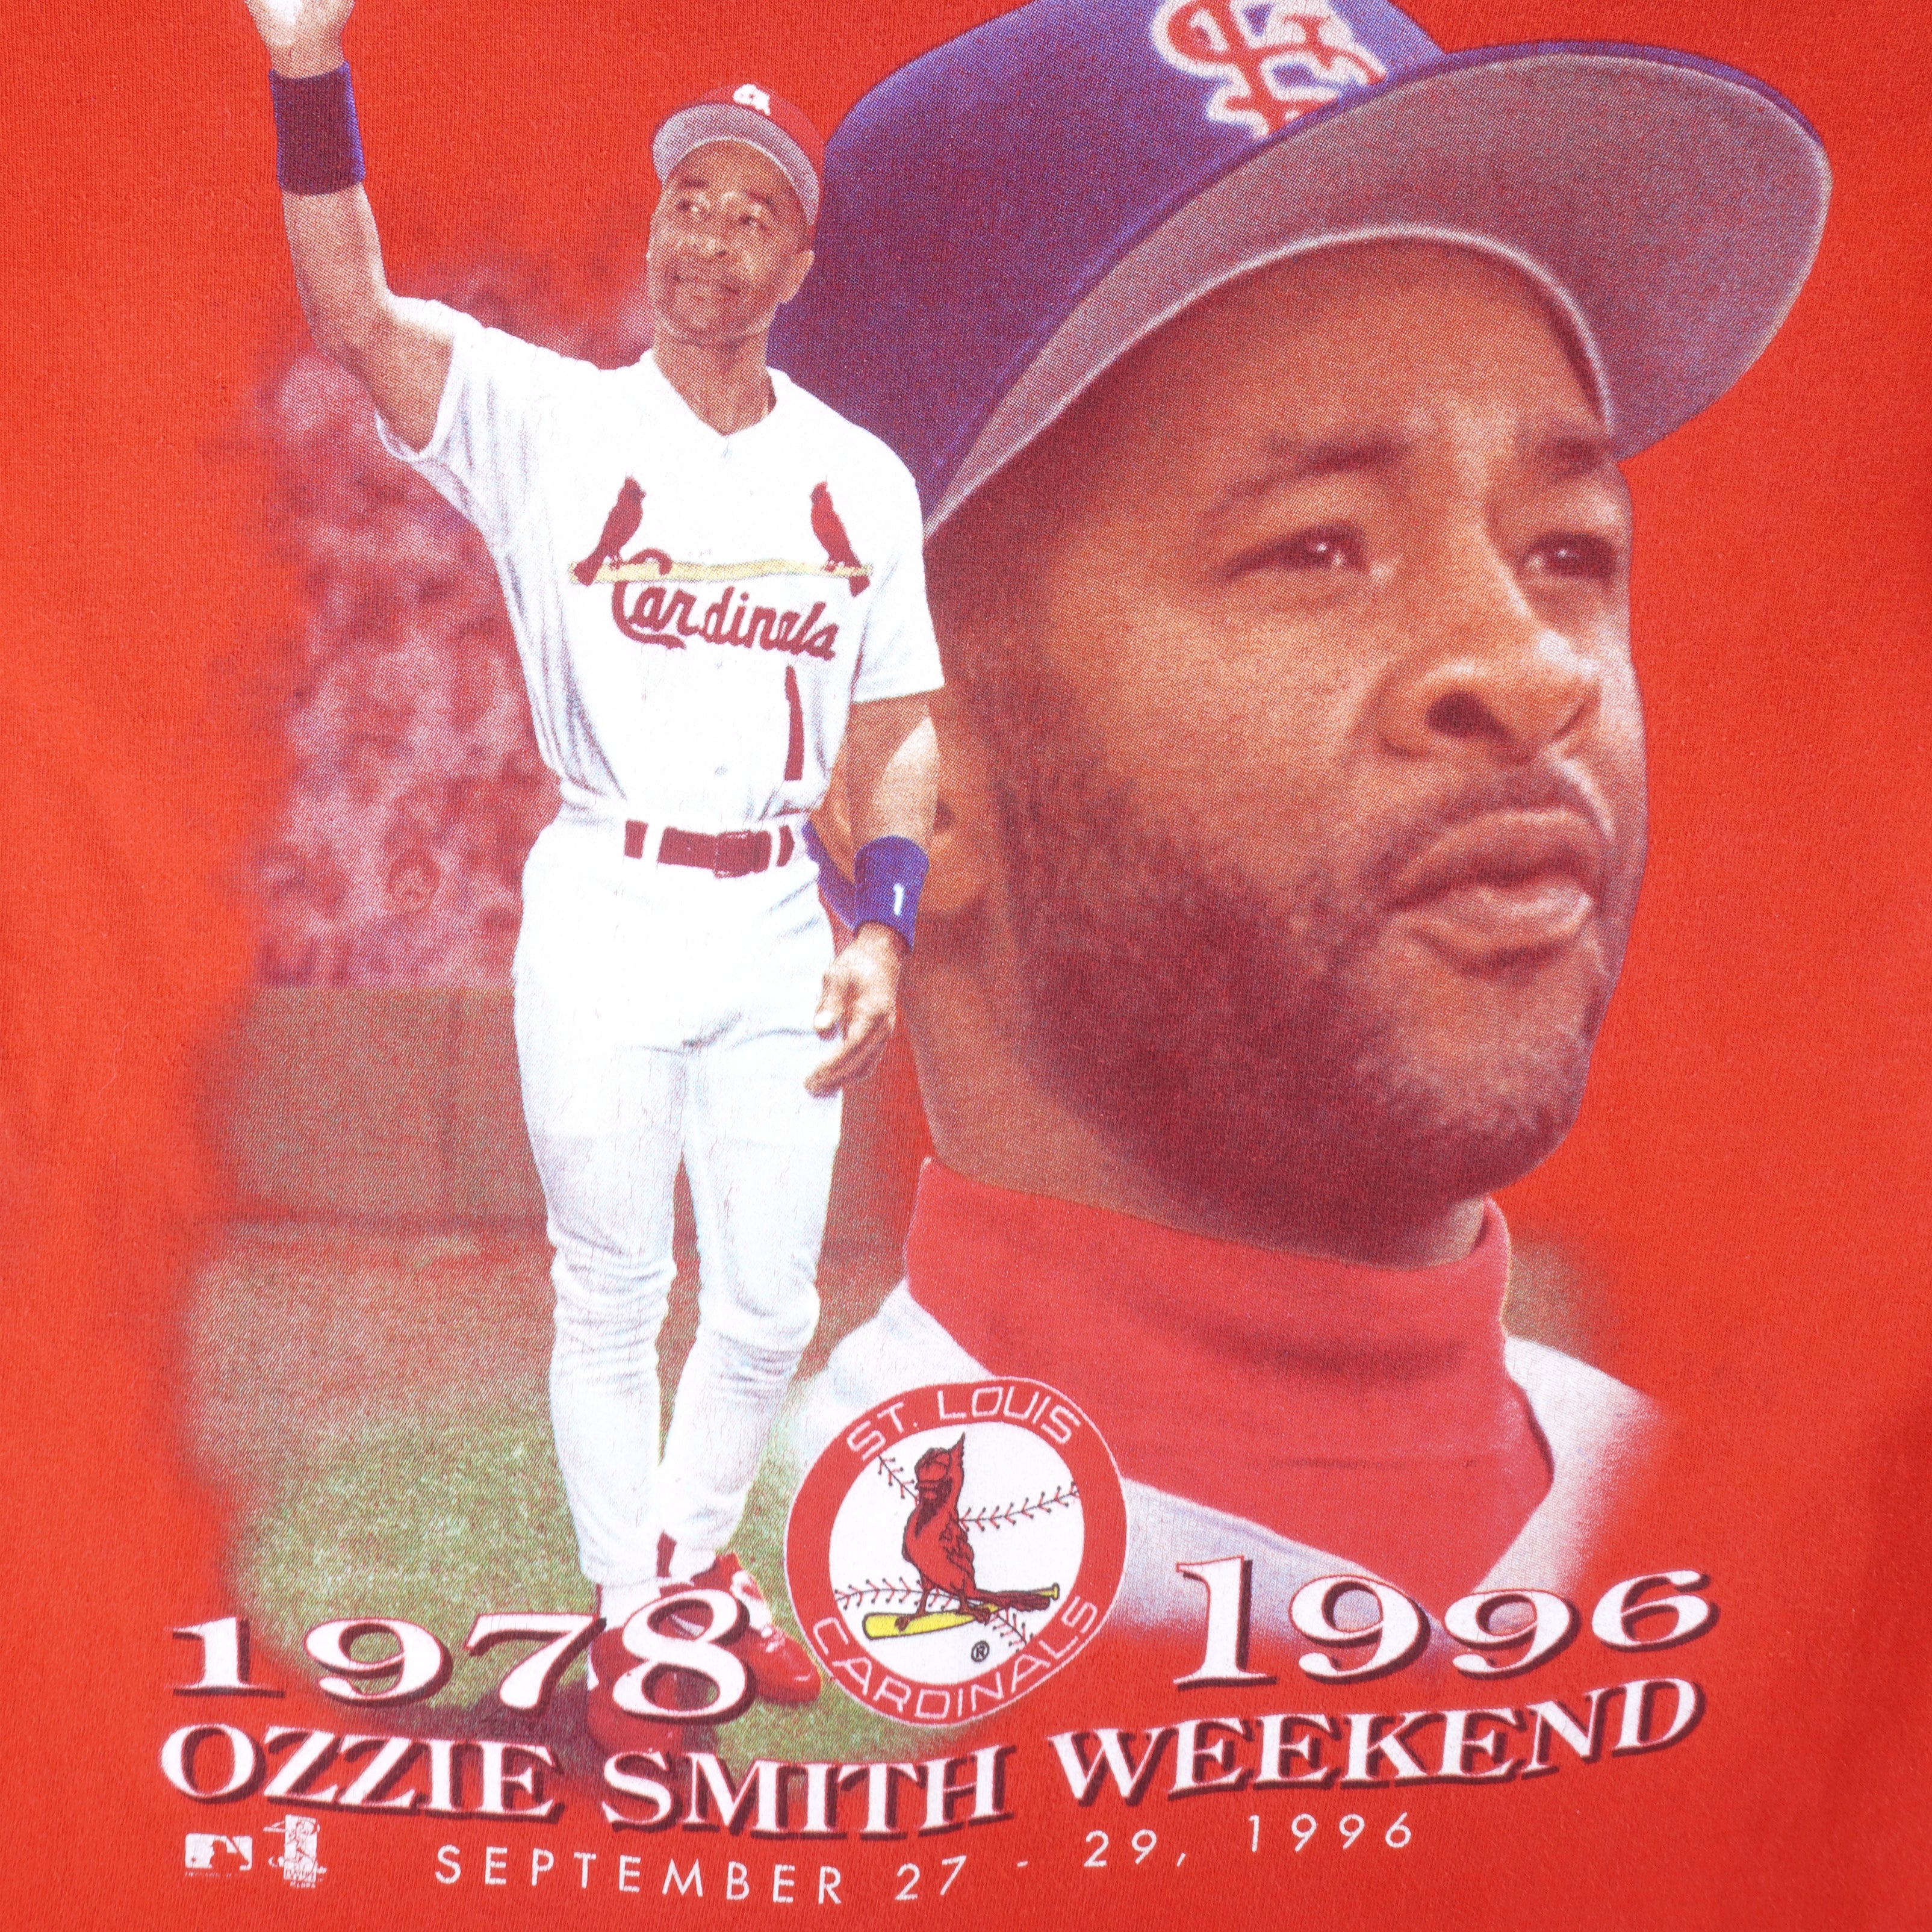 Sports / College Vintage Starter MLB St Louis Cardinals Sateen Jacket 1990s Large Made USA